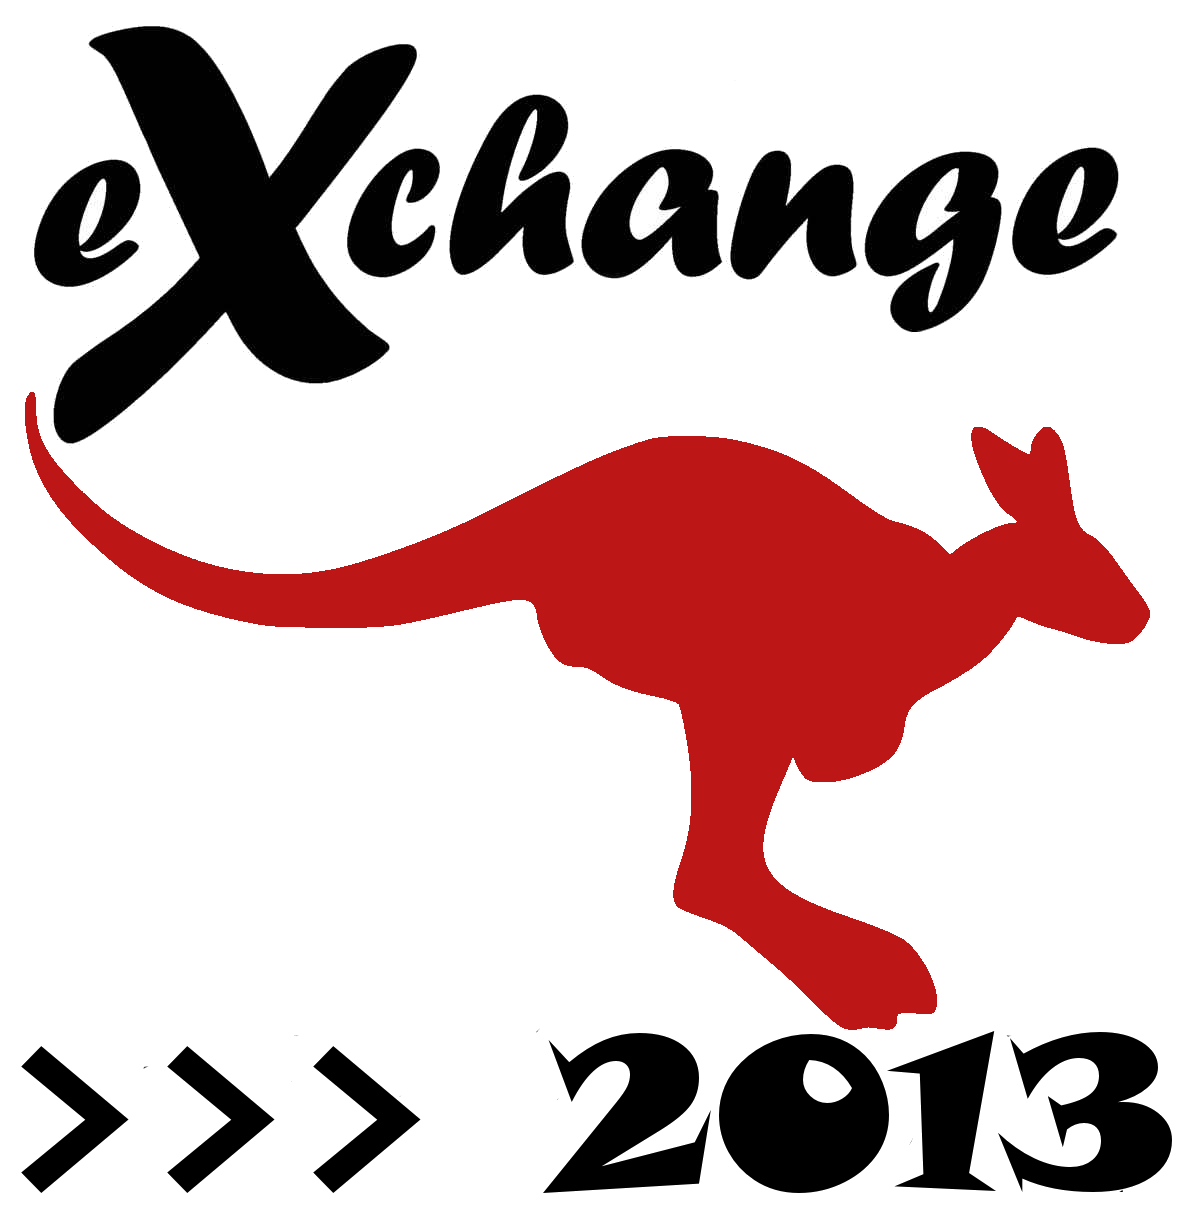 eXchange 2013